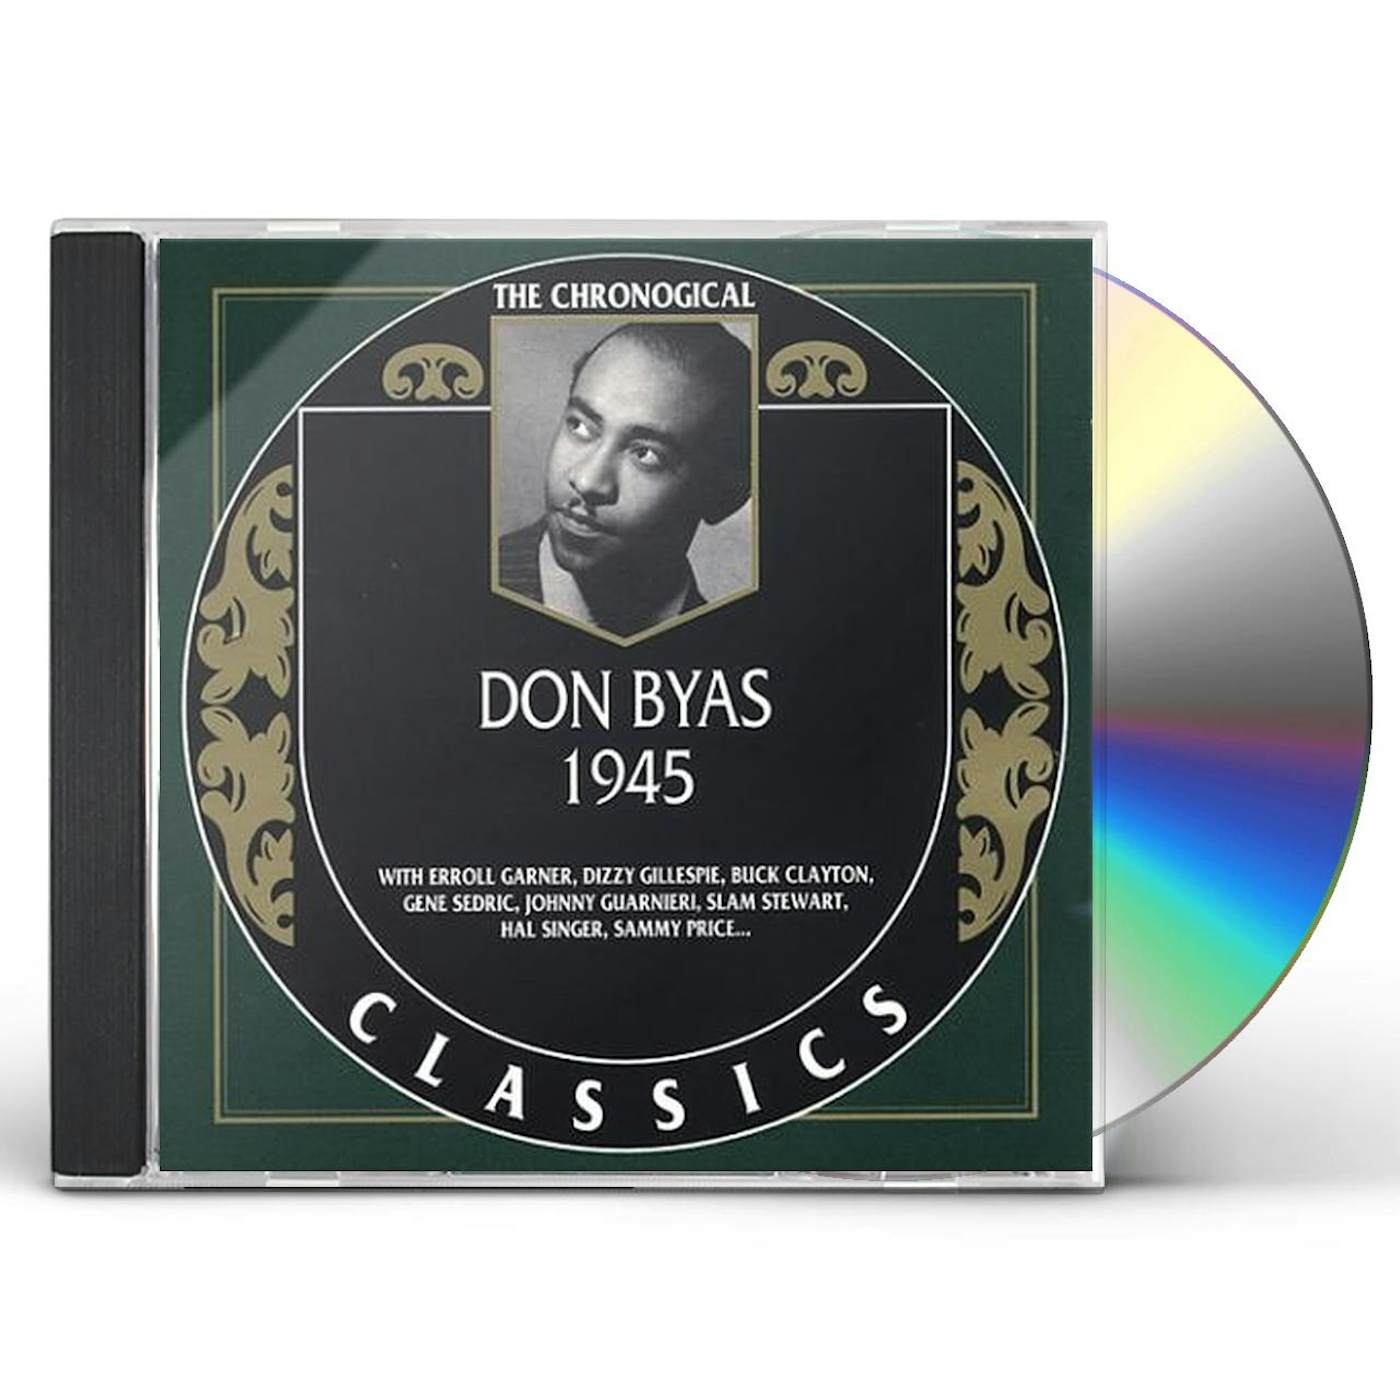 Don Byas 1945 CD